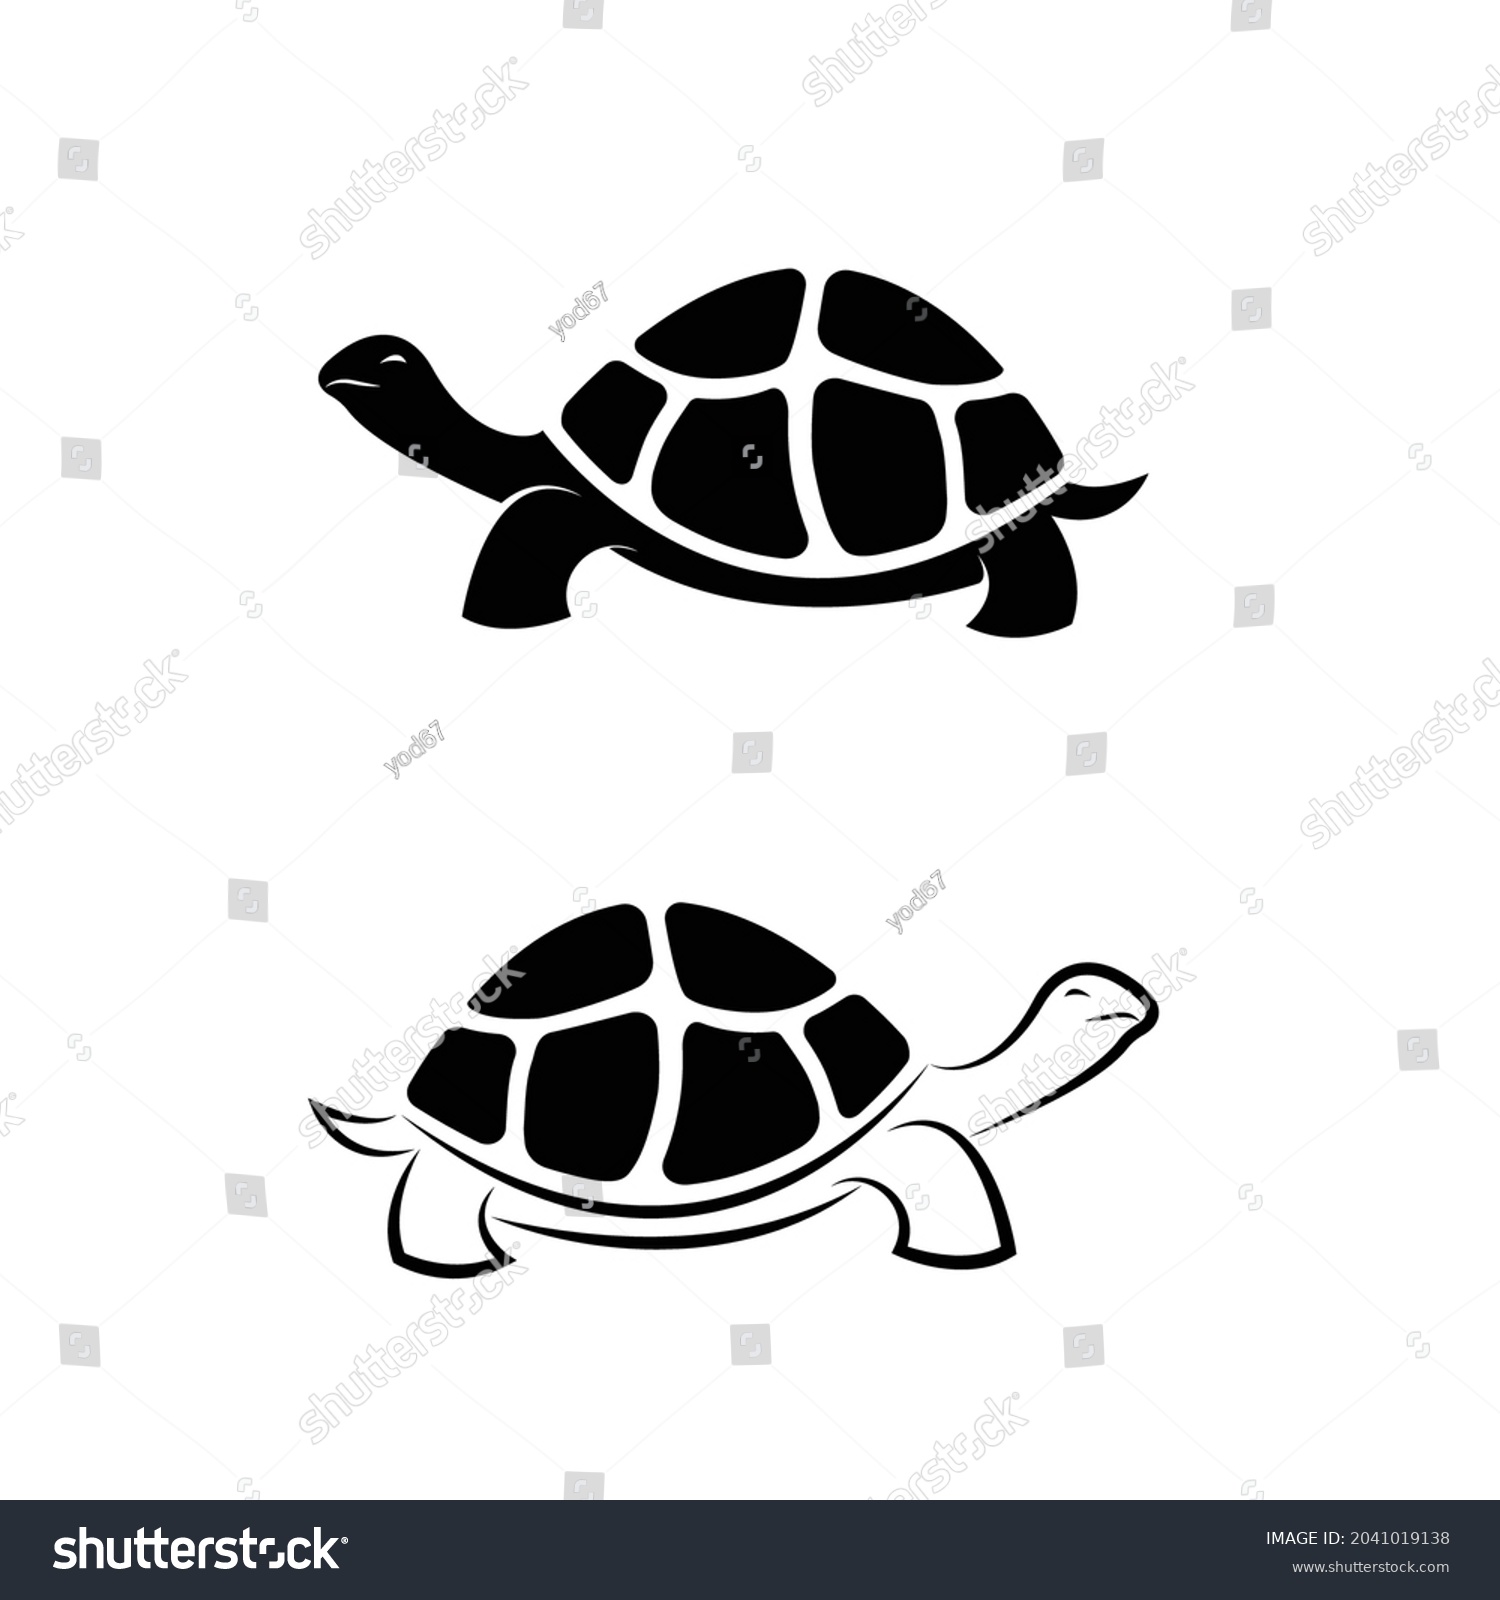 SVG of Vector of land tortoise design on white background. Easy editable layered vector illustration. Wild Animals. Amphibians. svg